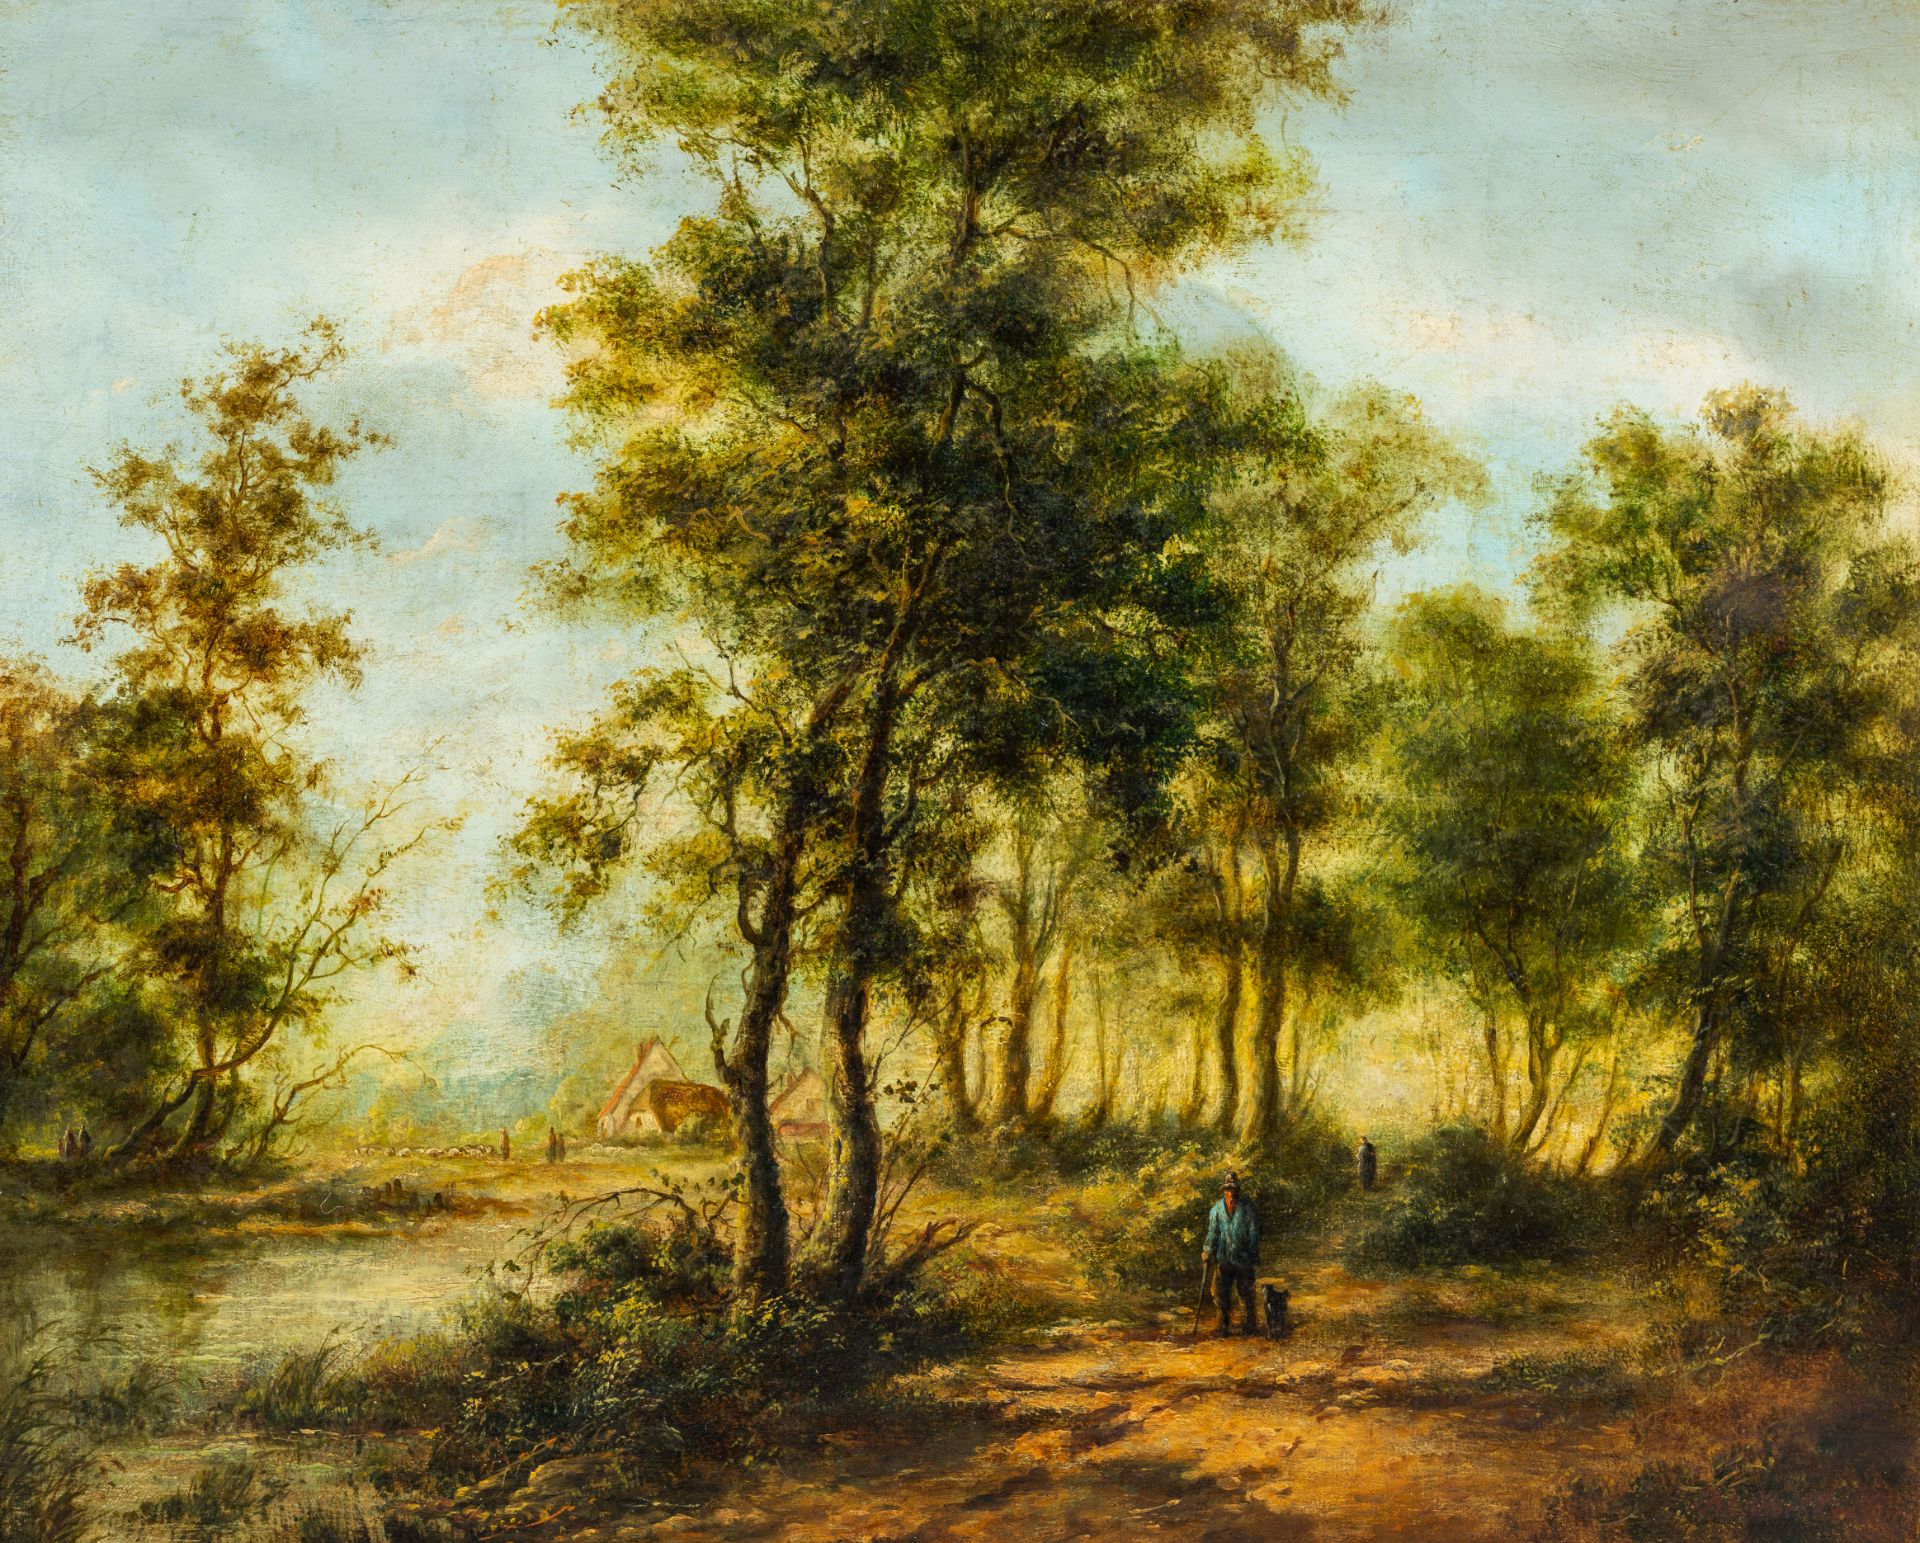 Barend Cornelis Koekkoek (1803-1862, in the manner of): Animated forest landscape, oil on canvas, 19